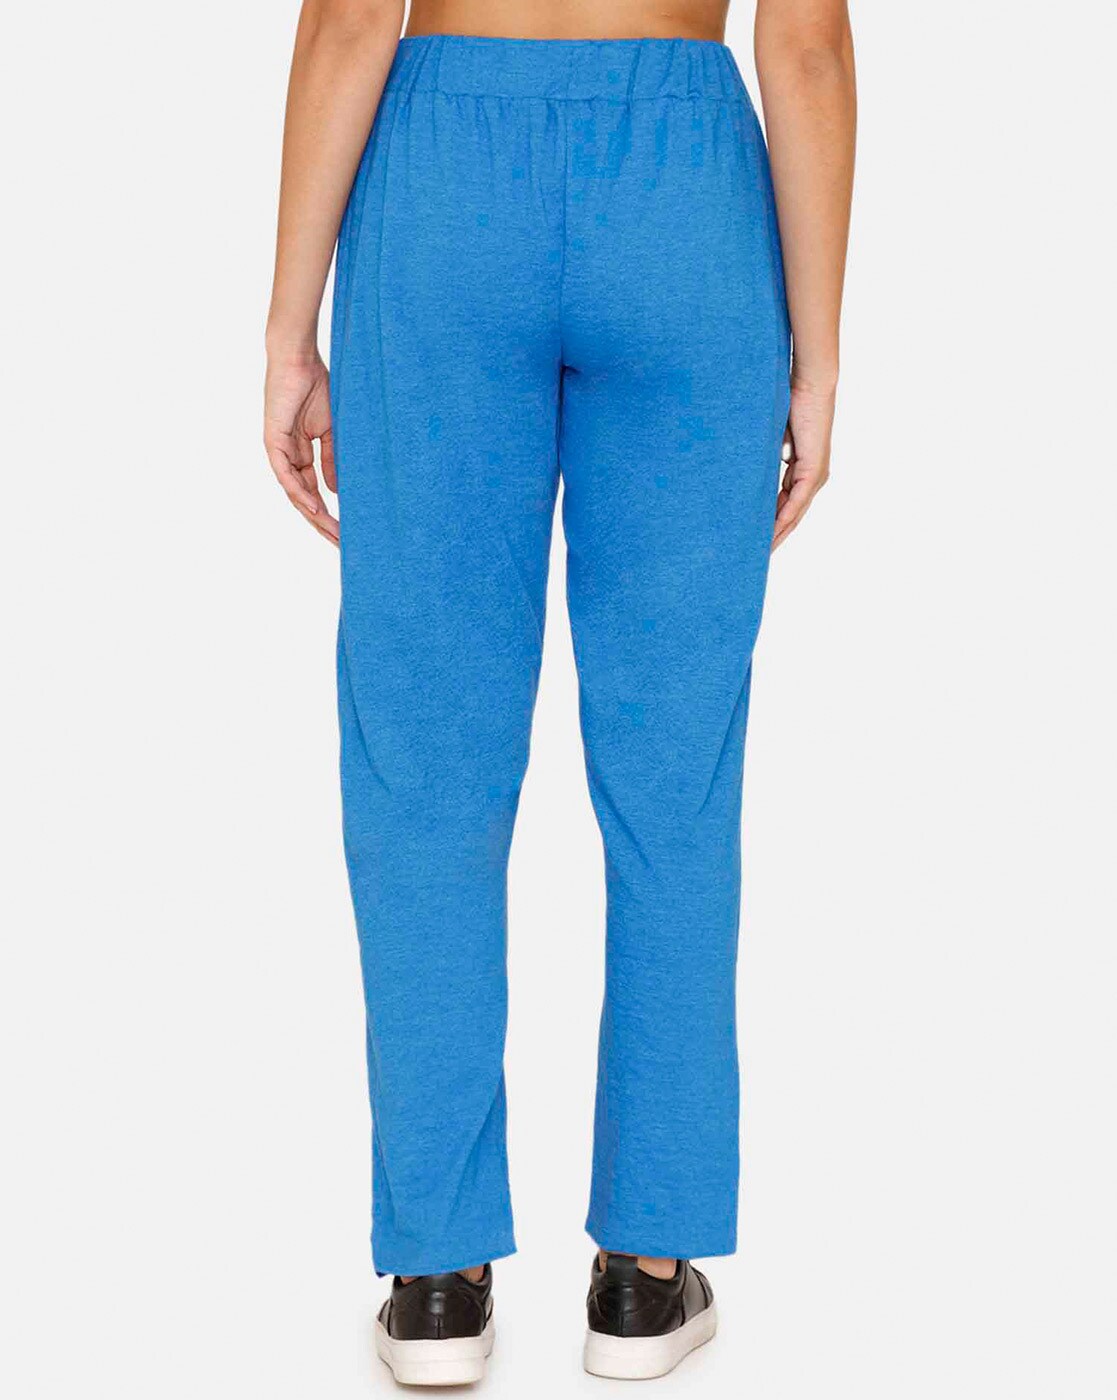 Buy Blue Track Pants for Women by Rosaline Online